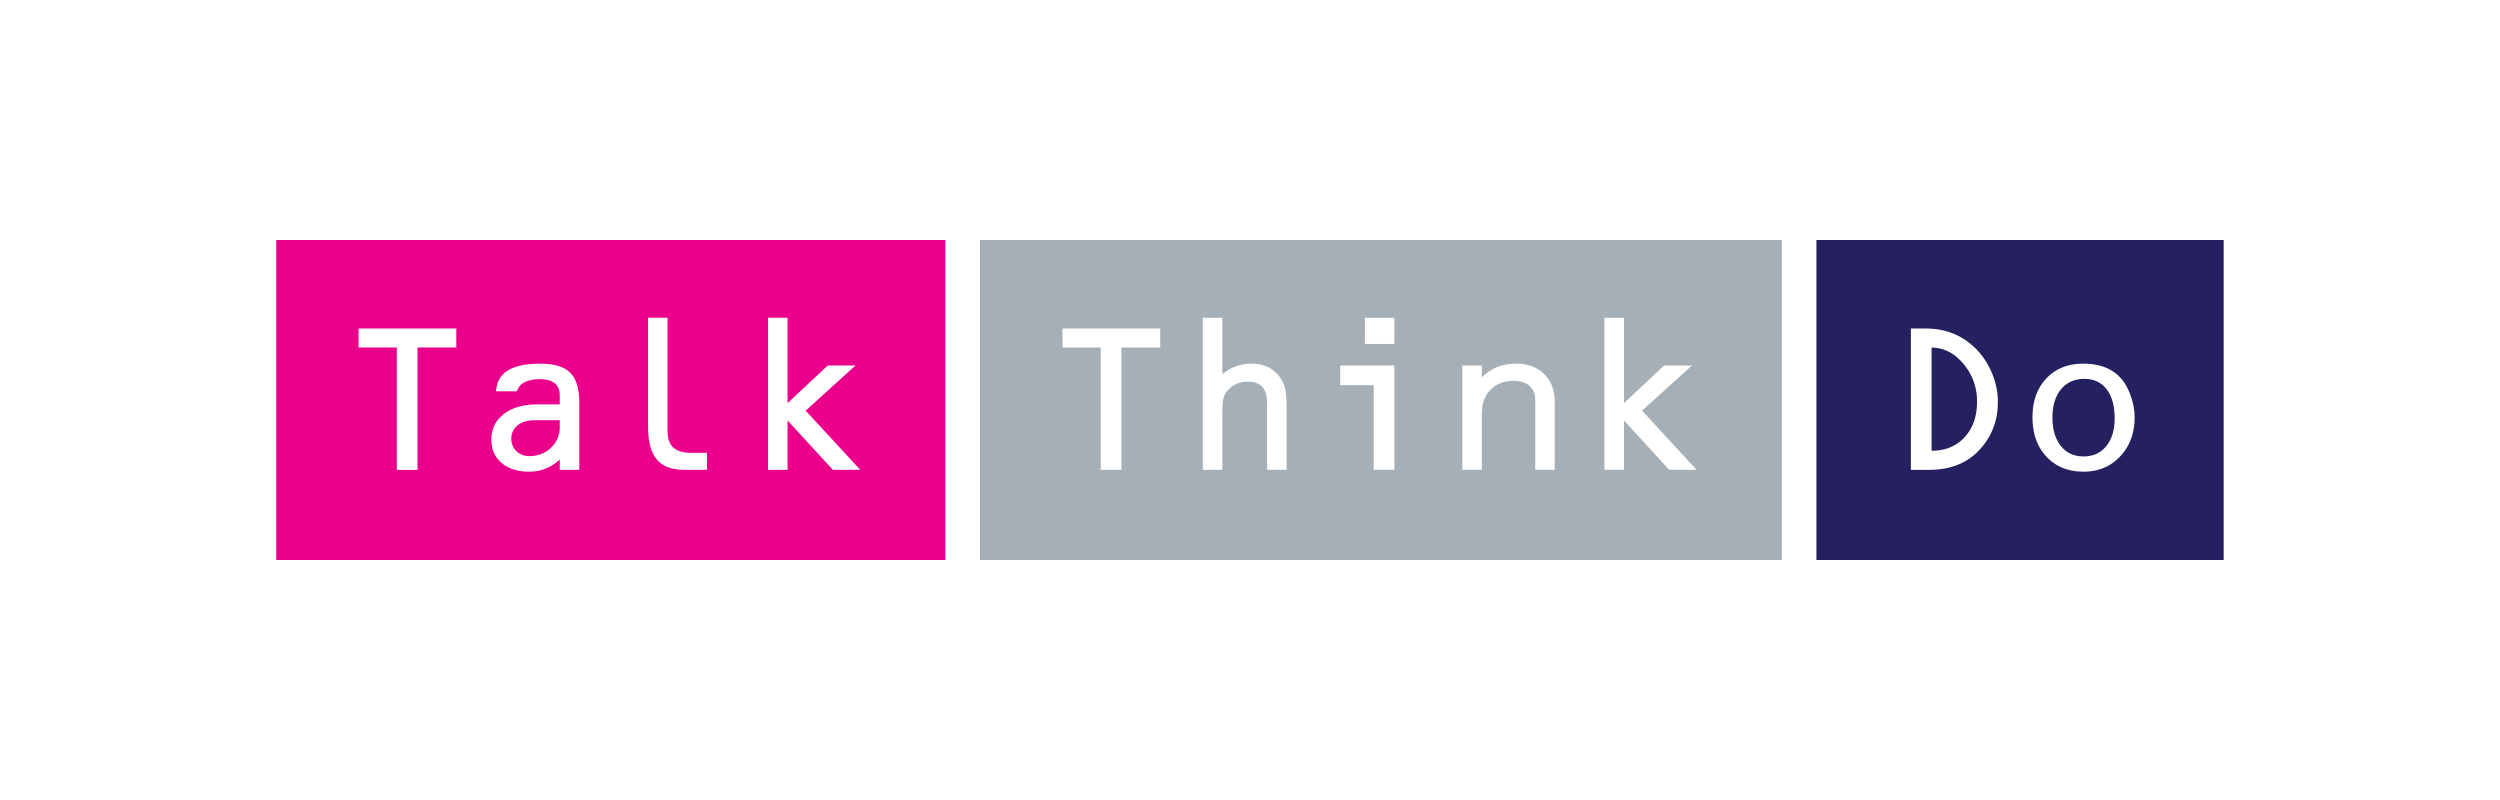 Talk Think Do Horizontal Partner logo